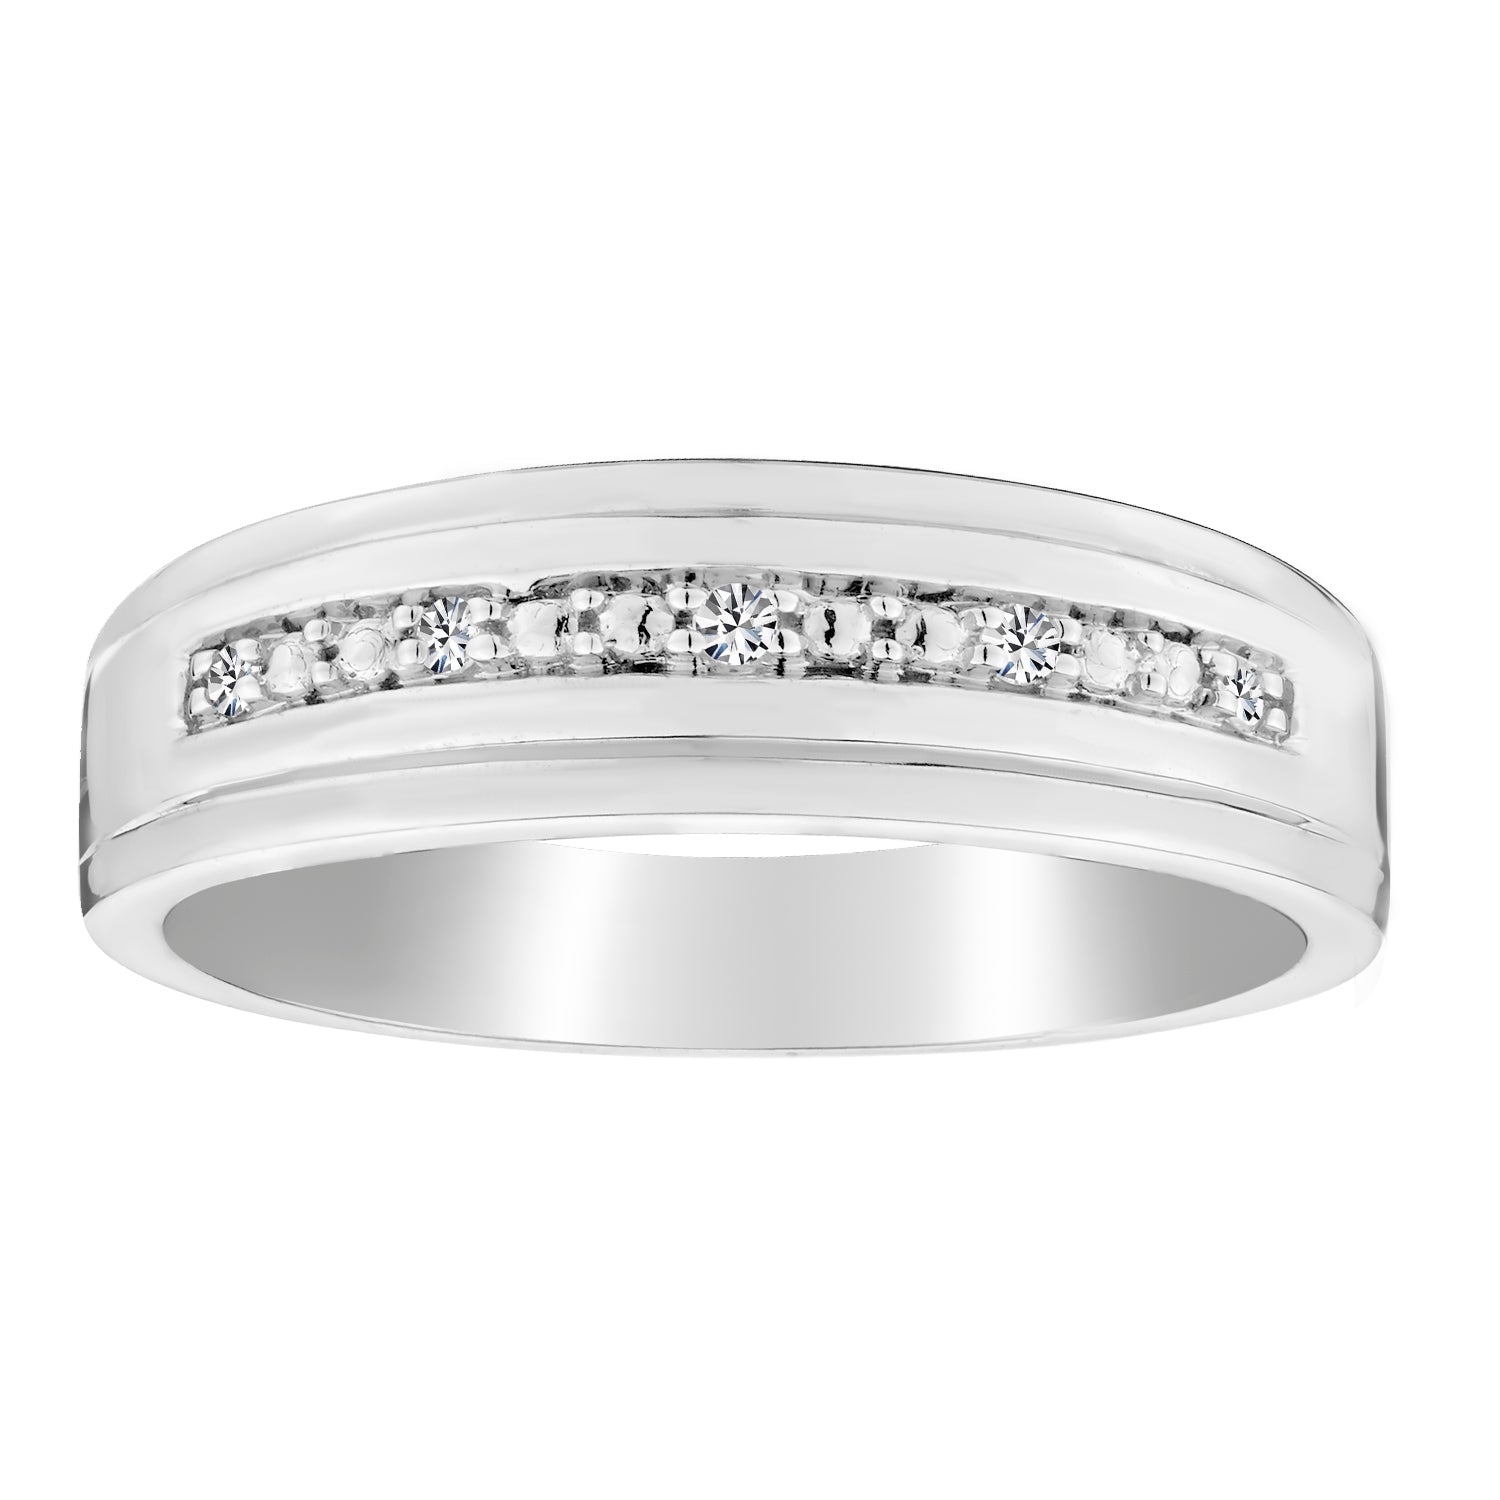 .05 Carat Diamond Gentleman's Ring,  10kt White Gold. Men’s Rings. Griffin Jewellery Designs. 